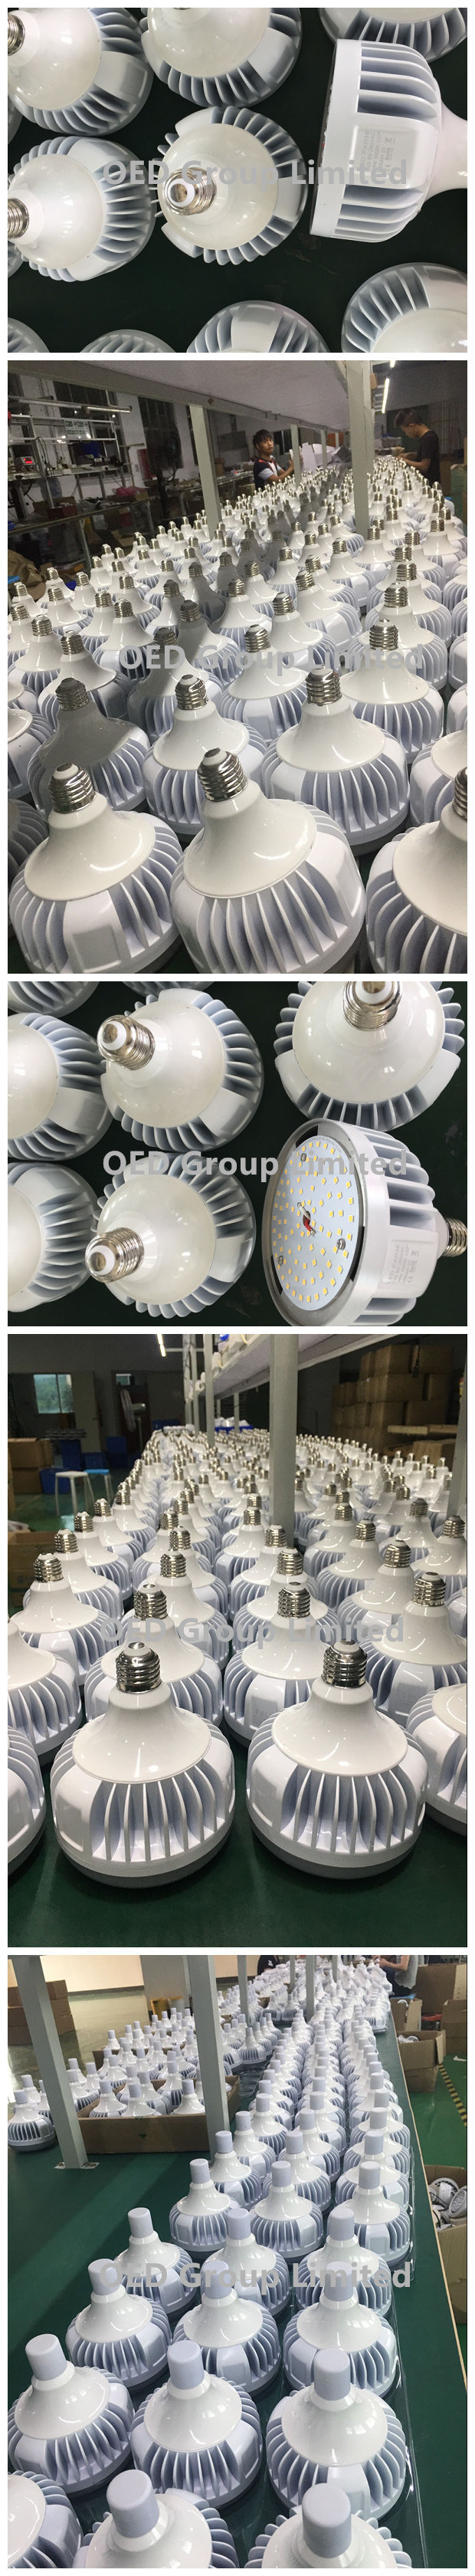 FCC Certification E26 E27 IP65 Waterproof PAR38 LED Bulbs with 130lm/W, 35W LED PAR Lamp with 4500lm and White Color Aluminum